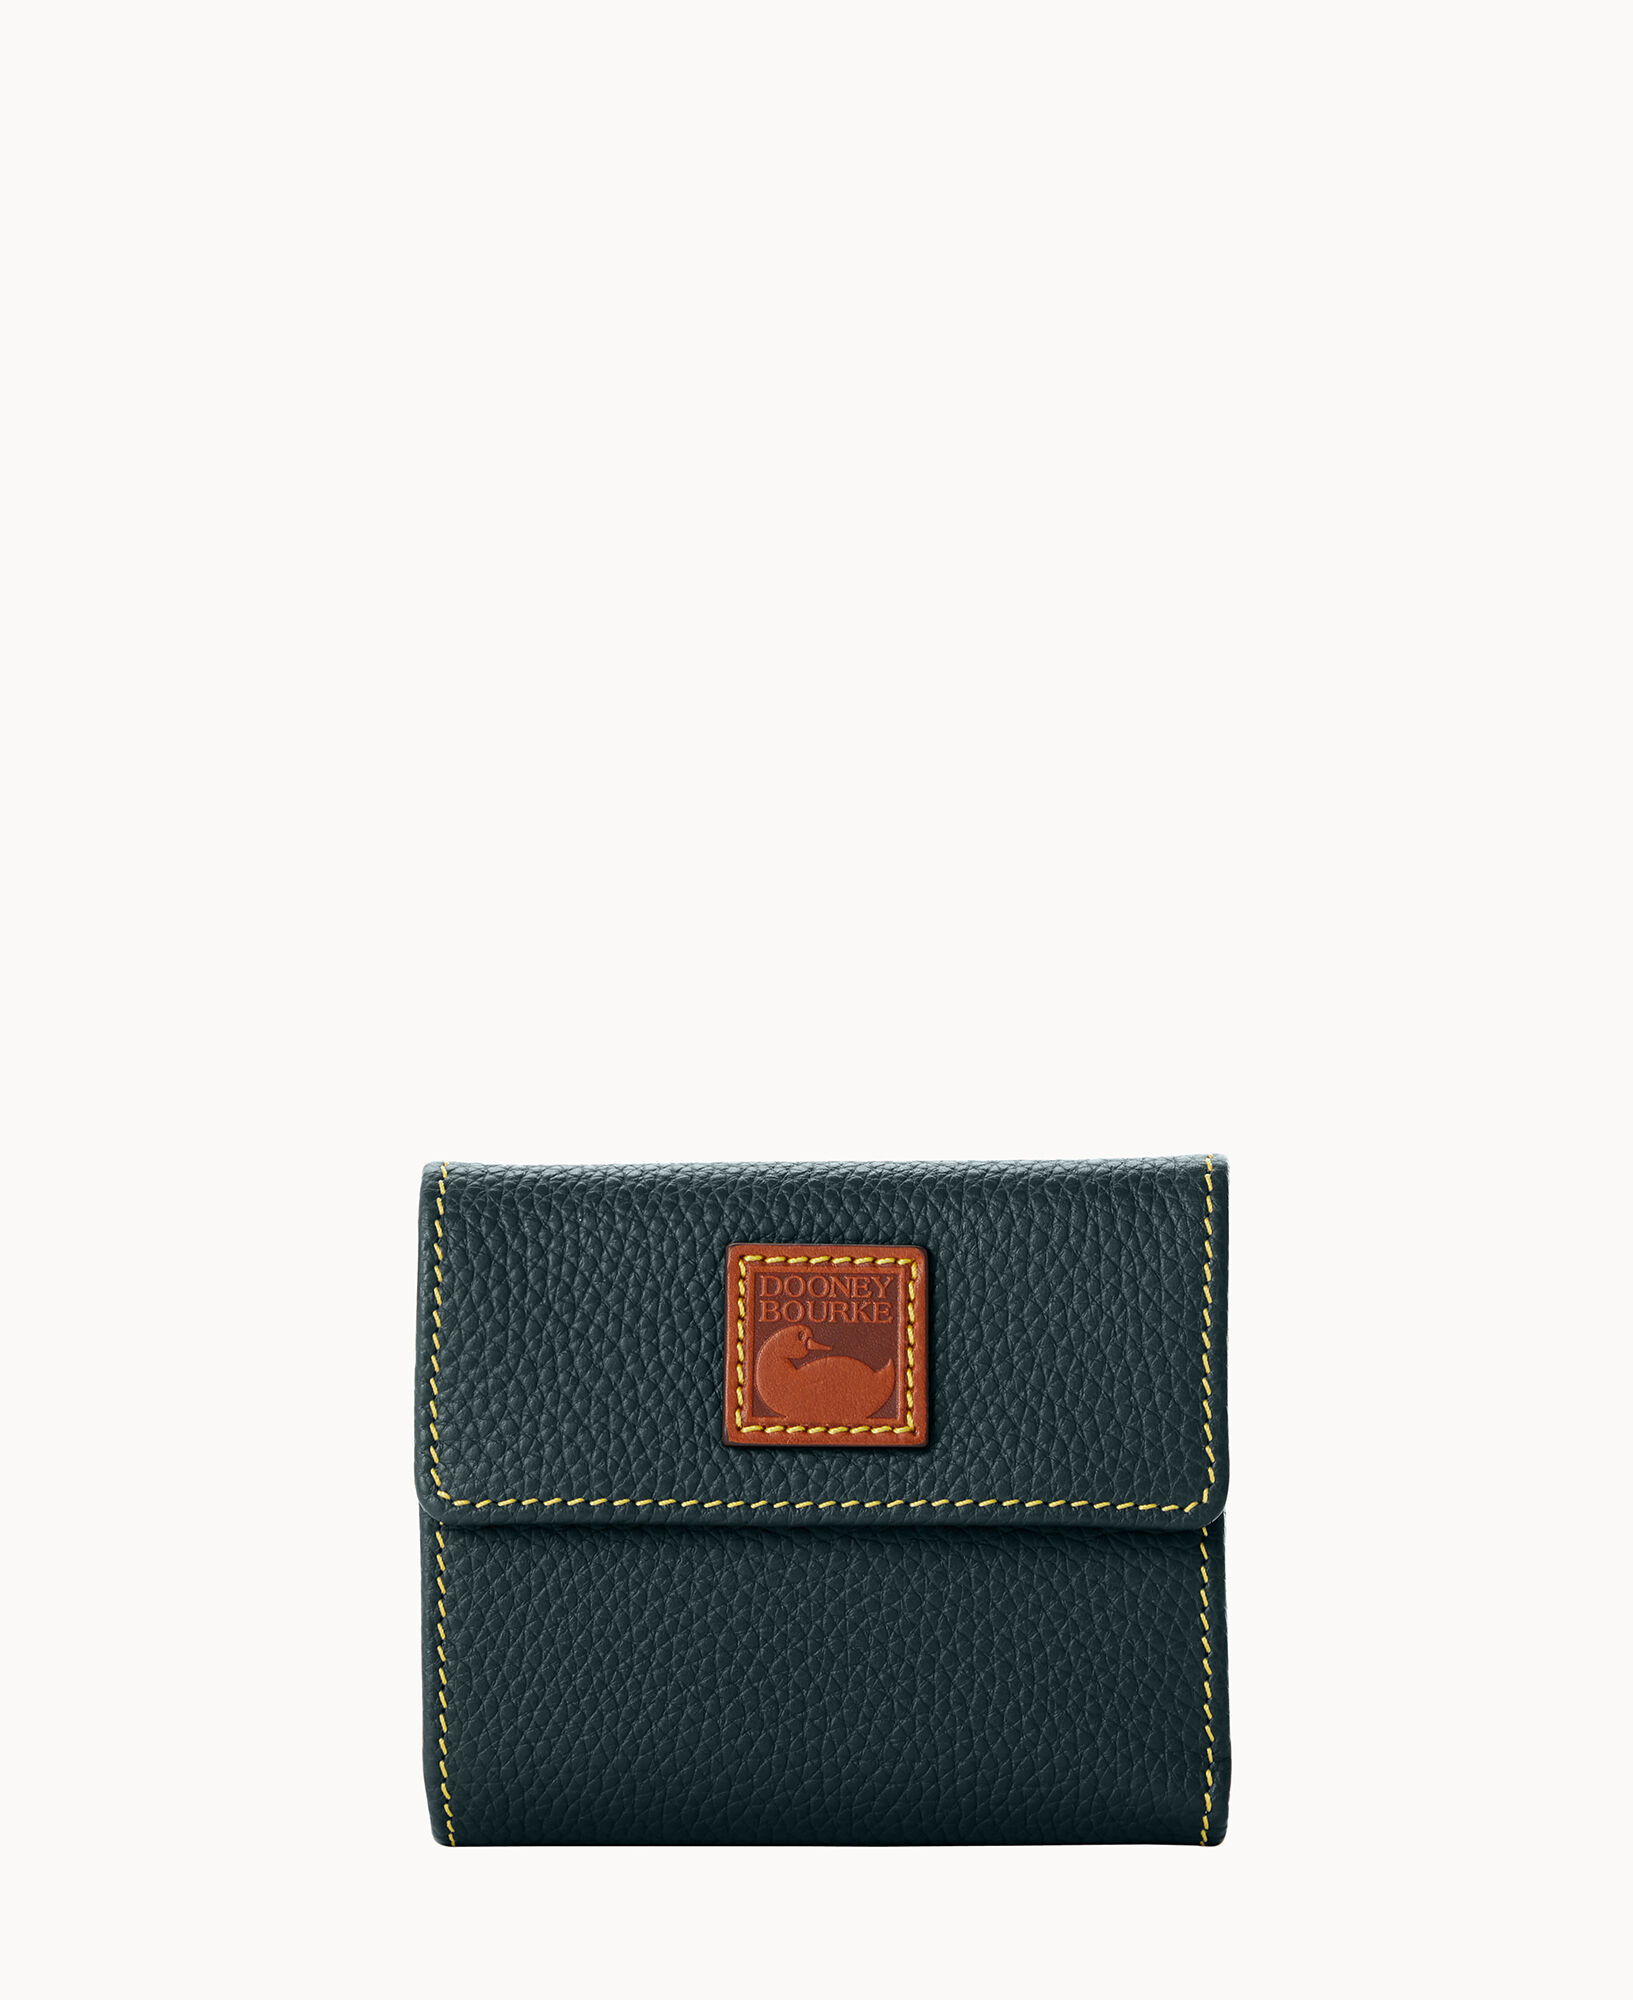 Dooney & Bourke Pebble Leather Small Flap Wallet ,Black